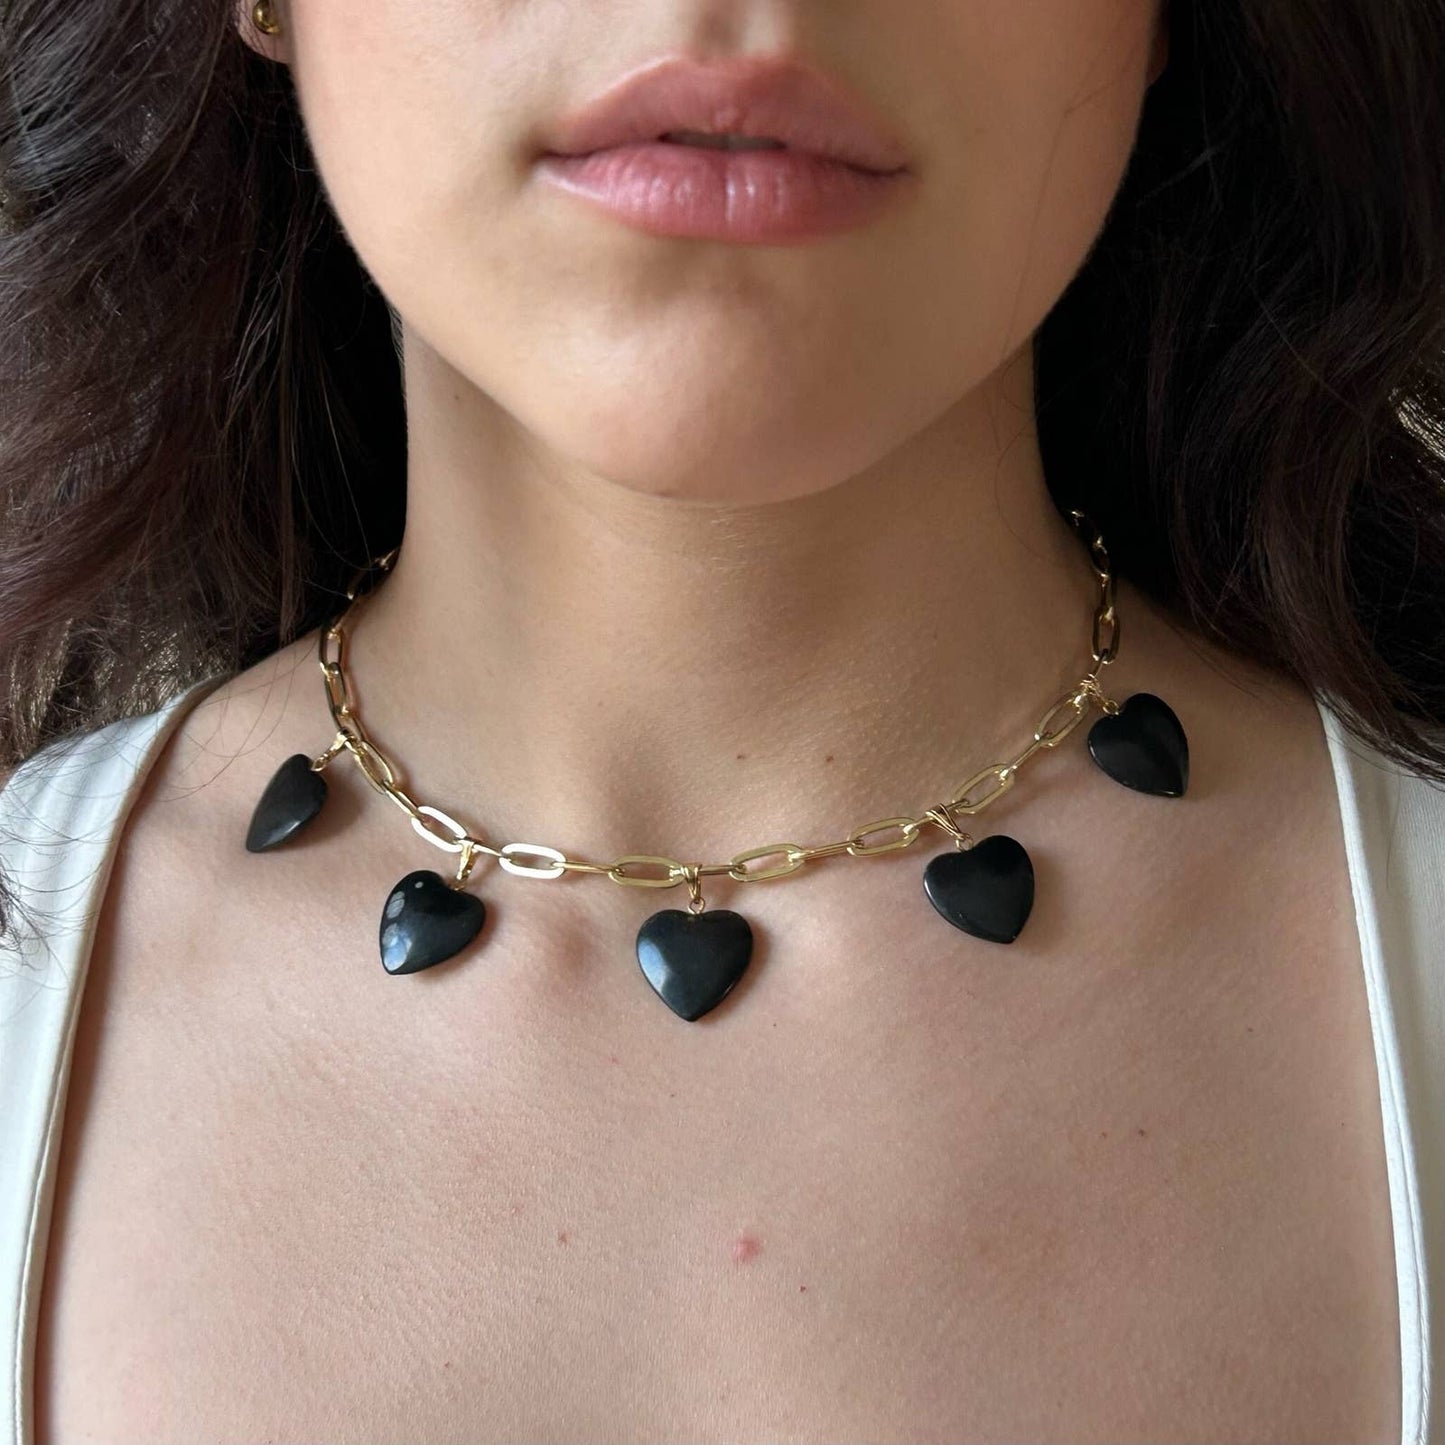 Handmade Heart Charm Necklace - Black Onyx Stones